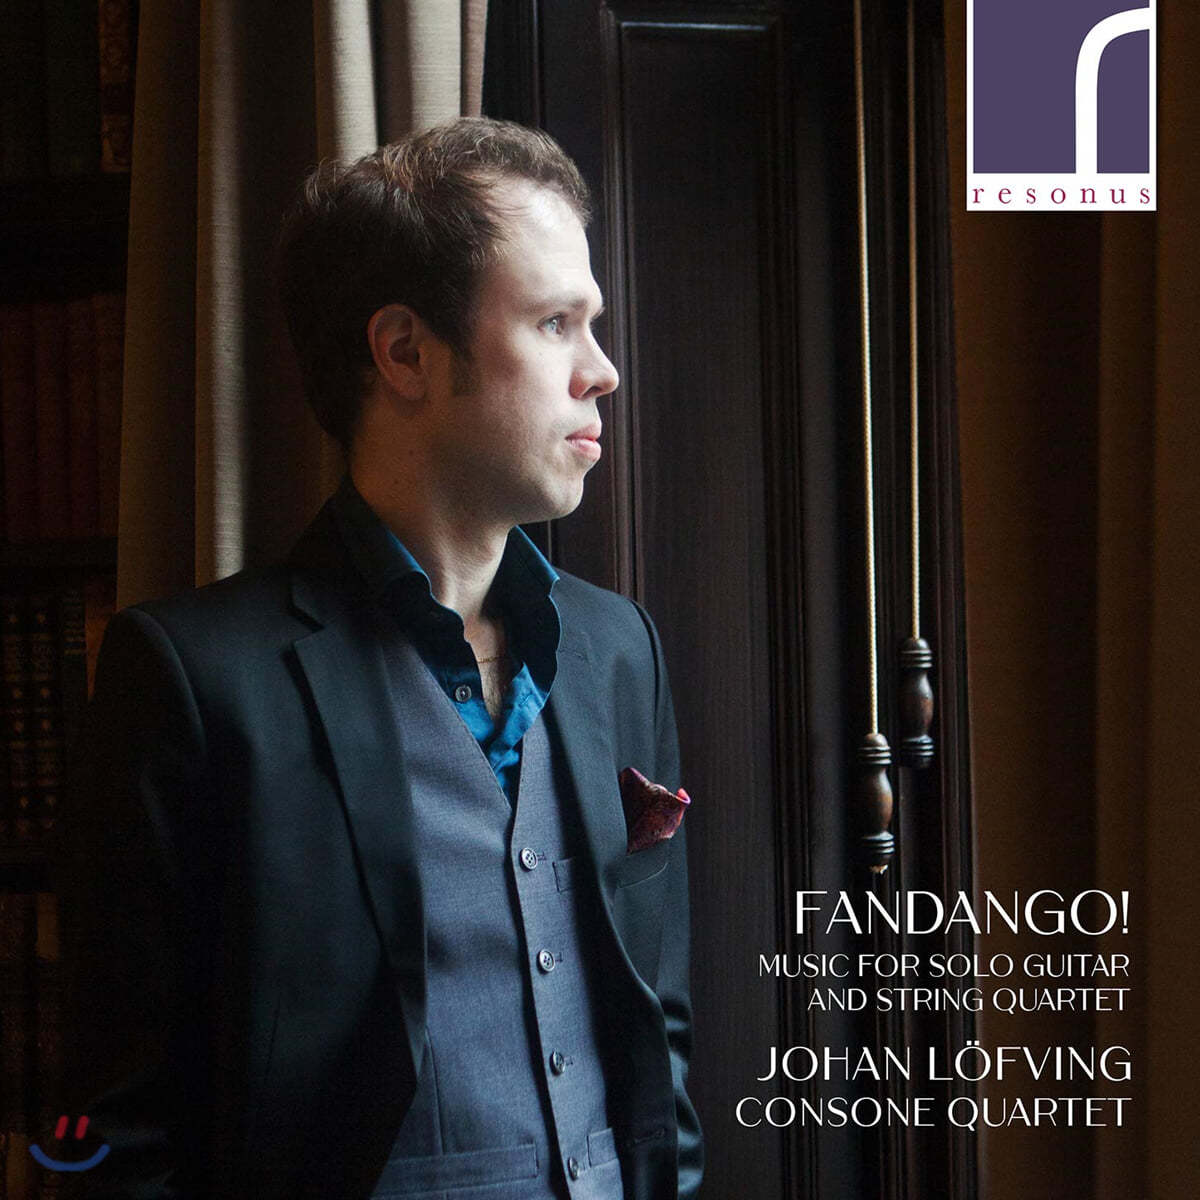 Johan Lofving 기타와 현악 사중주를 위한 음악집 (Fandango! - Music for Solo Guitar and String Quartet)